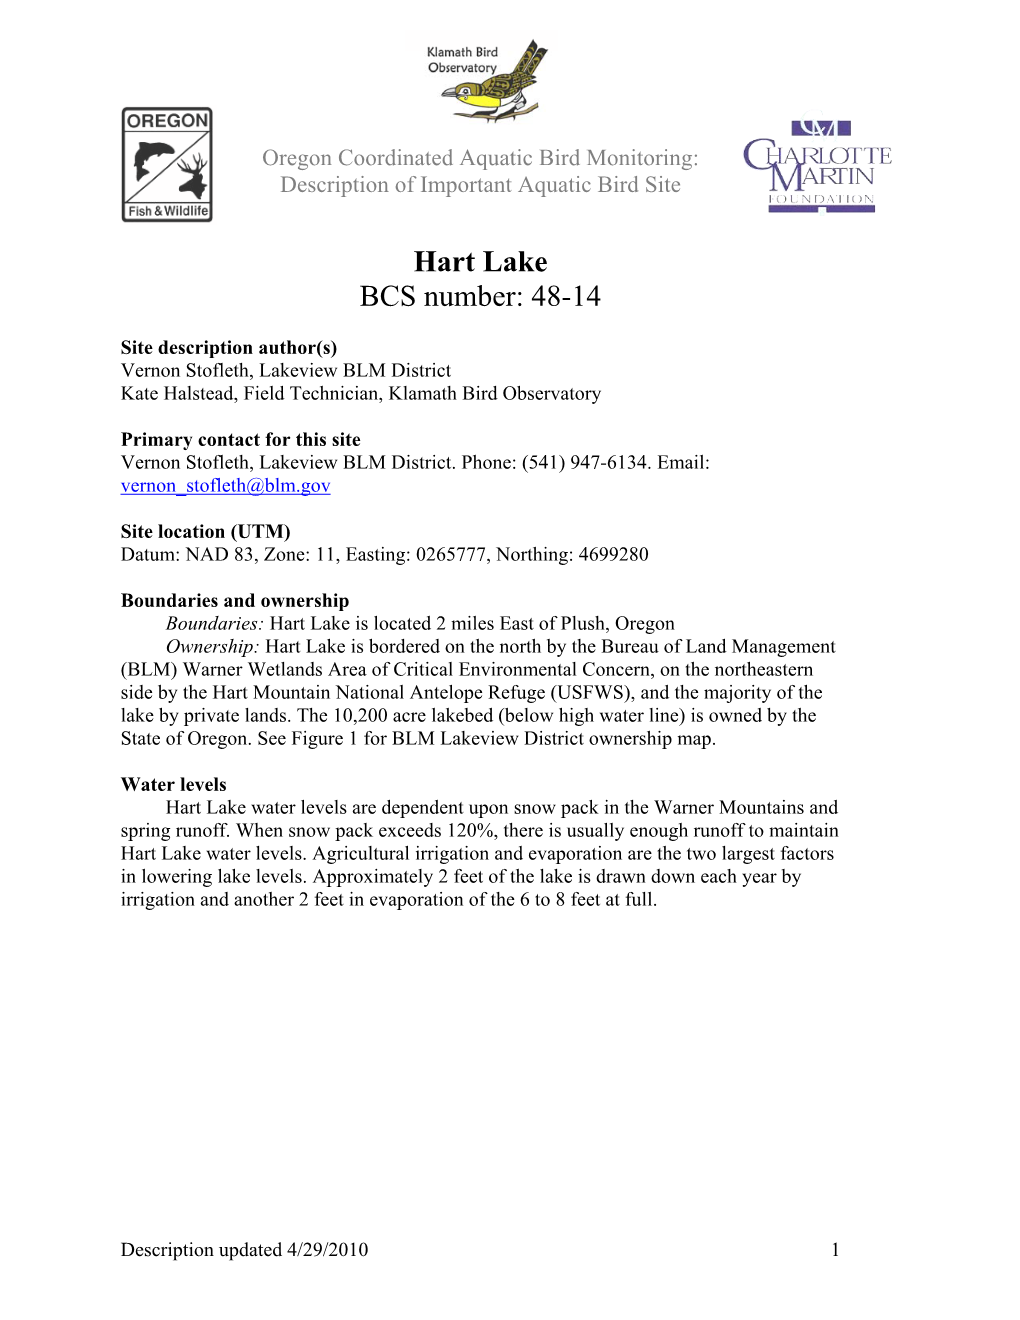 Hart Lake BCS Number: 48-14